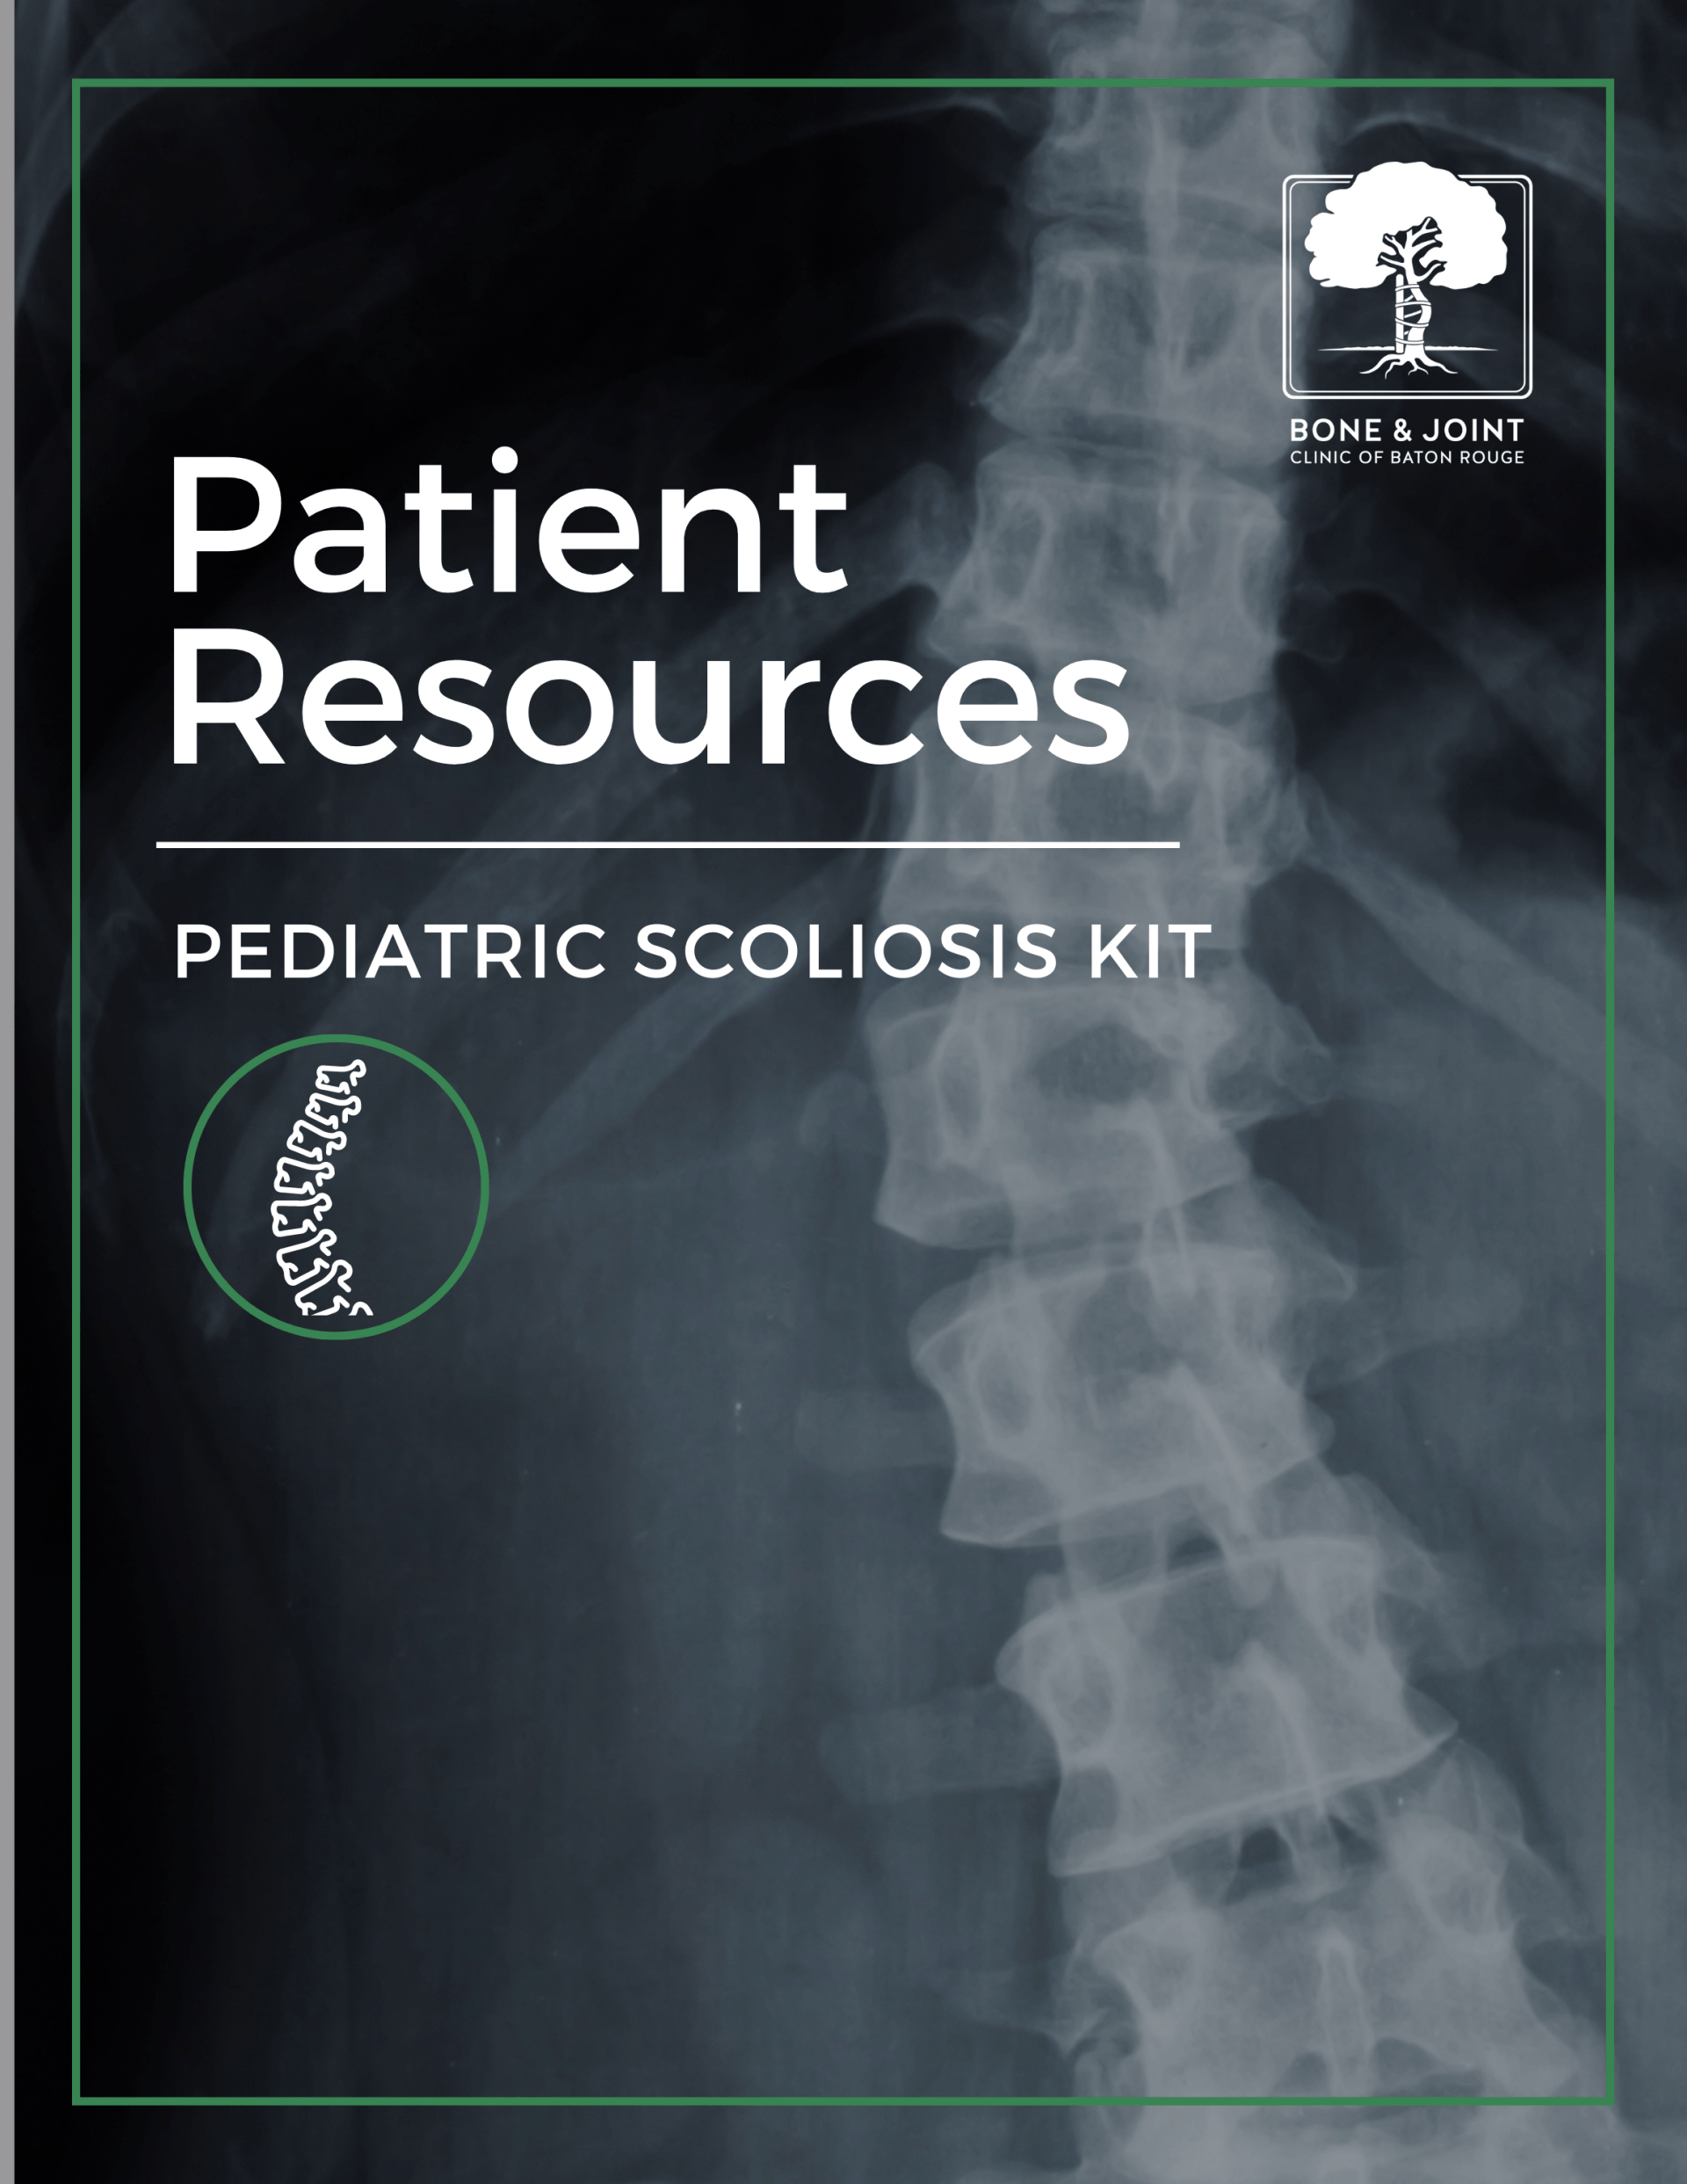 Pediatric scoliosis patient resources kit